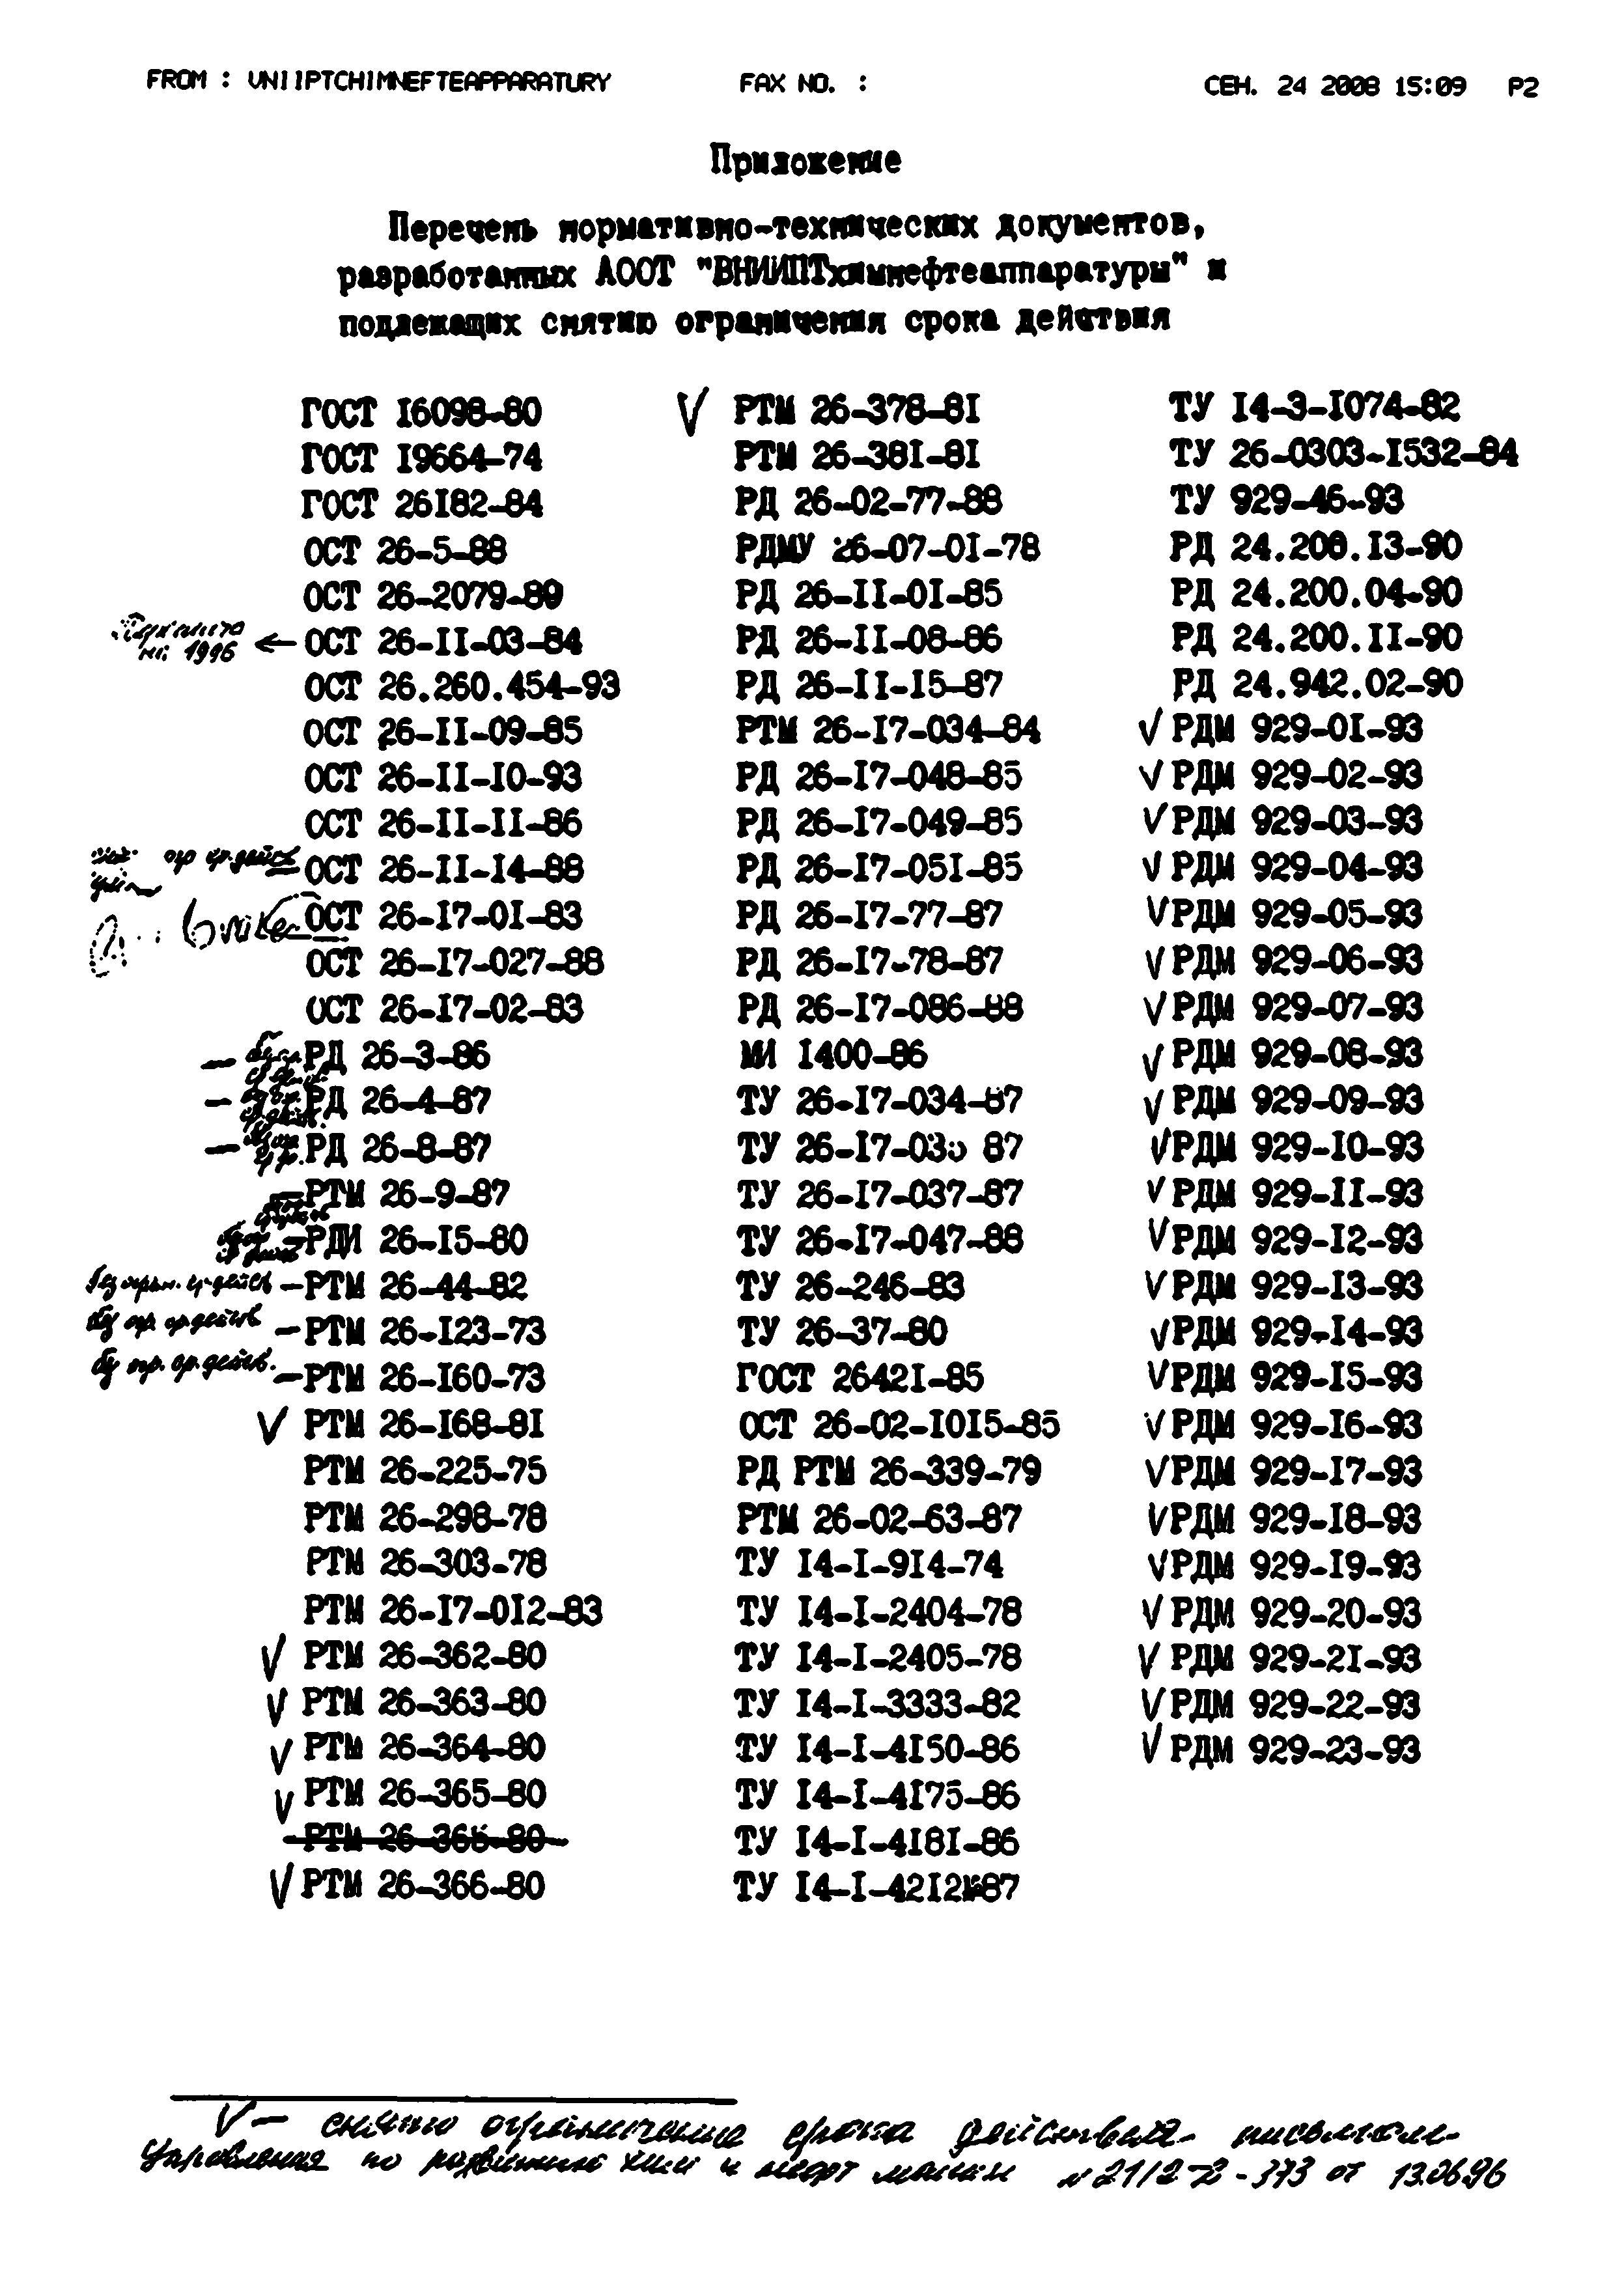 РДМ 929-19-93